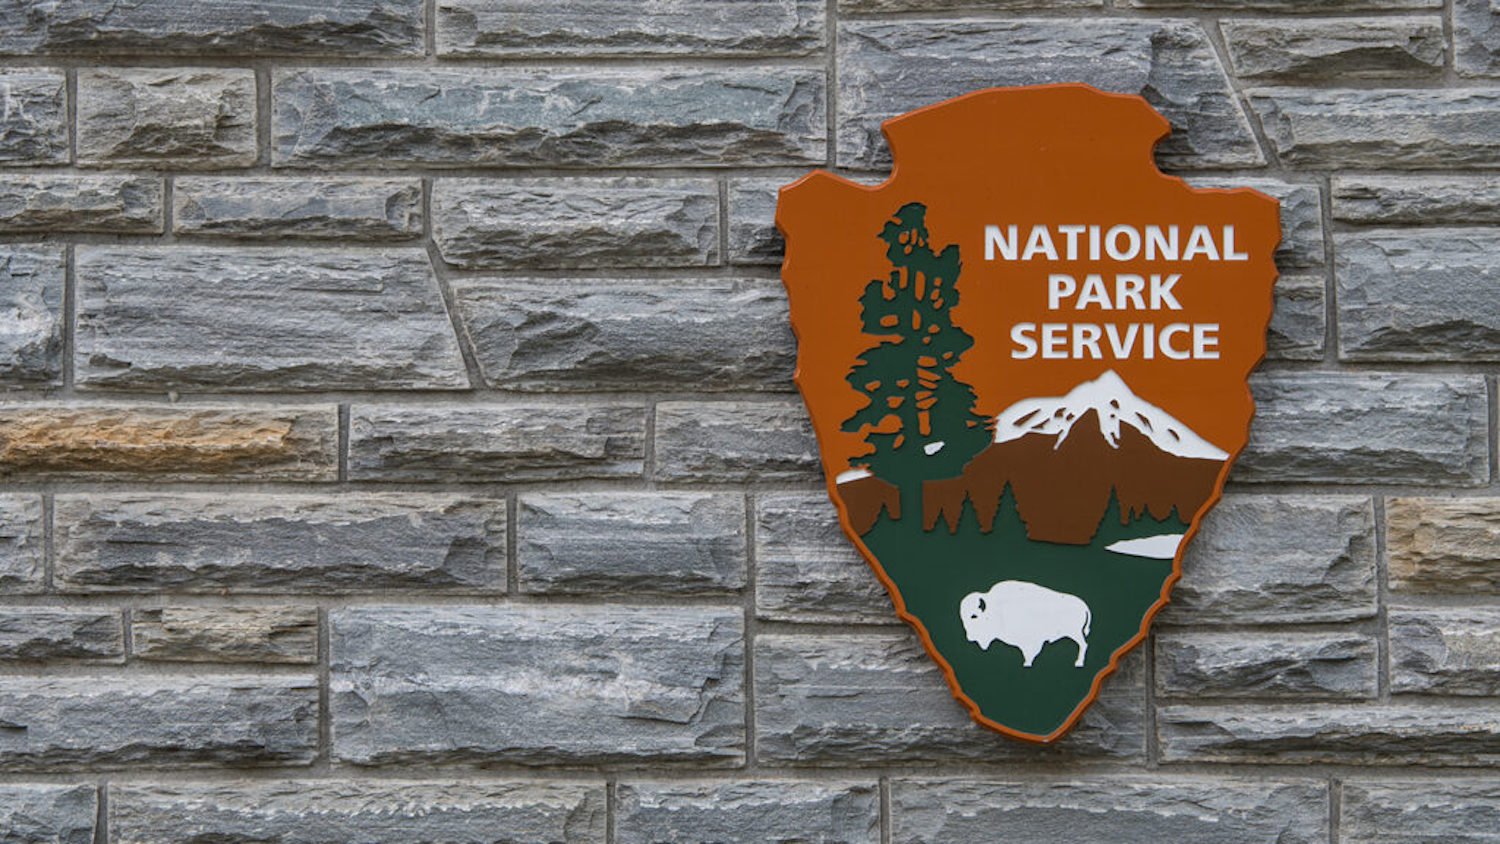 A National Park Service sign